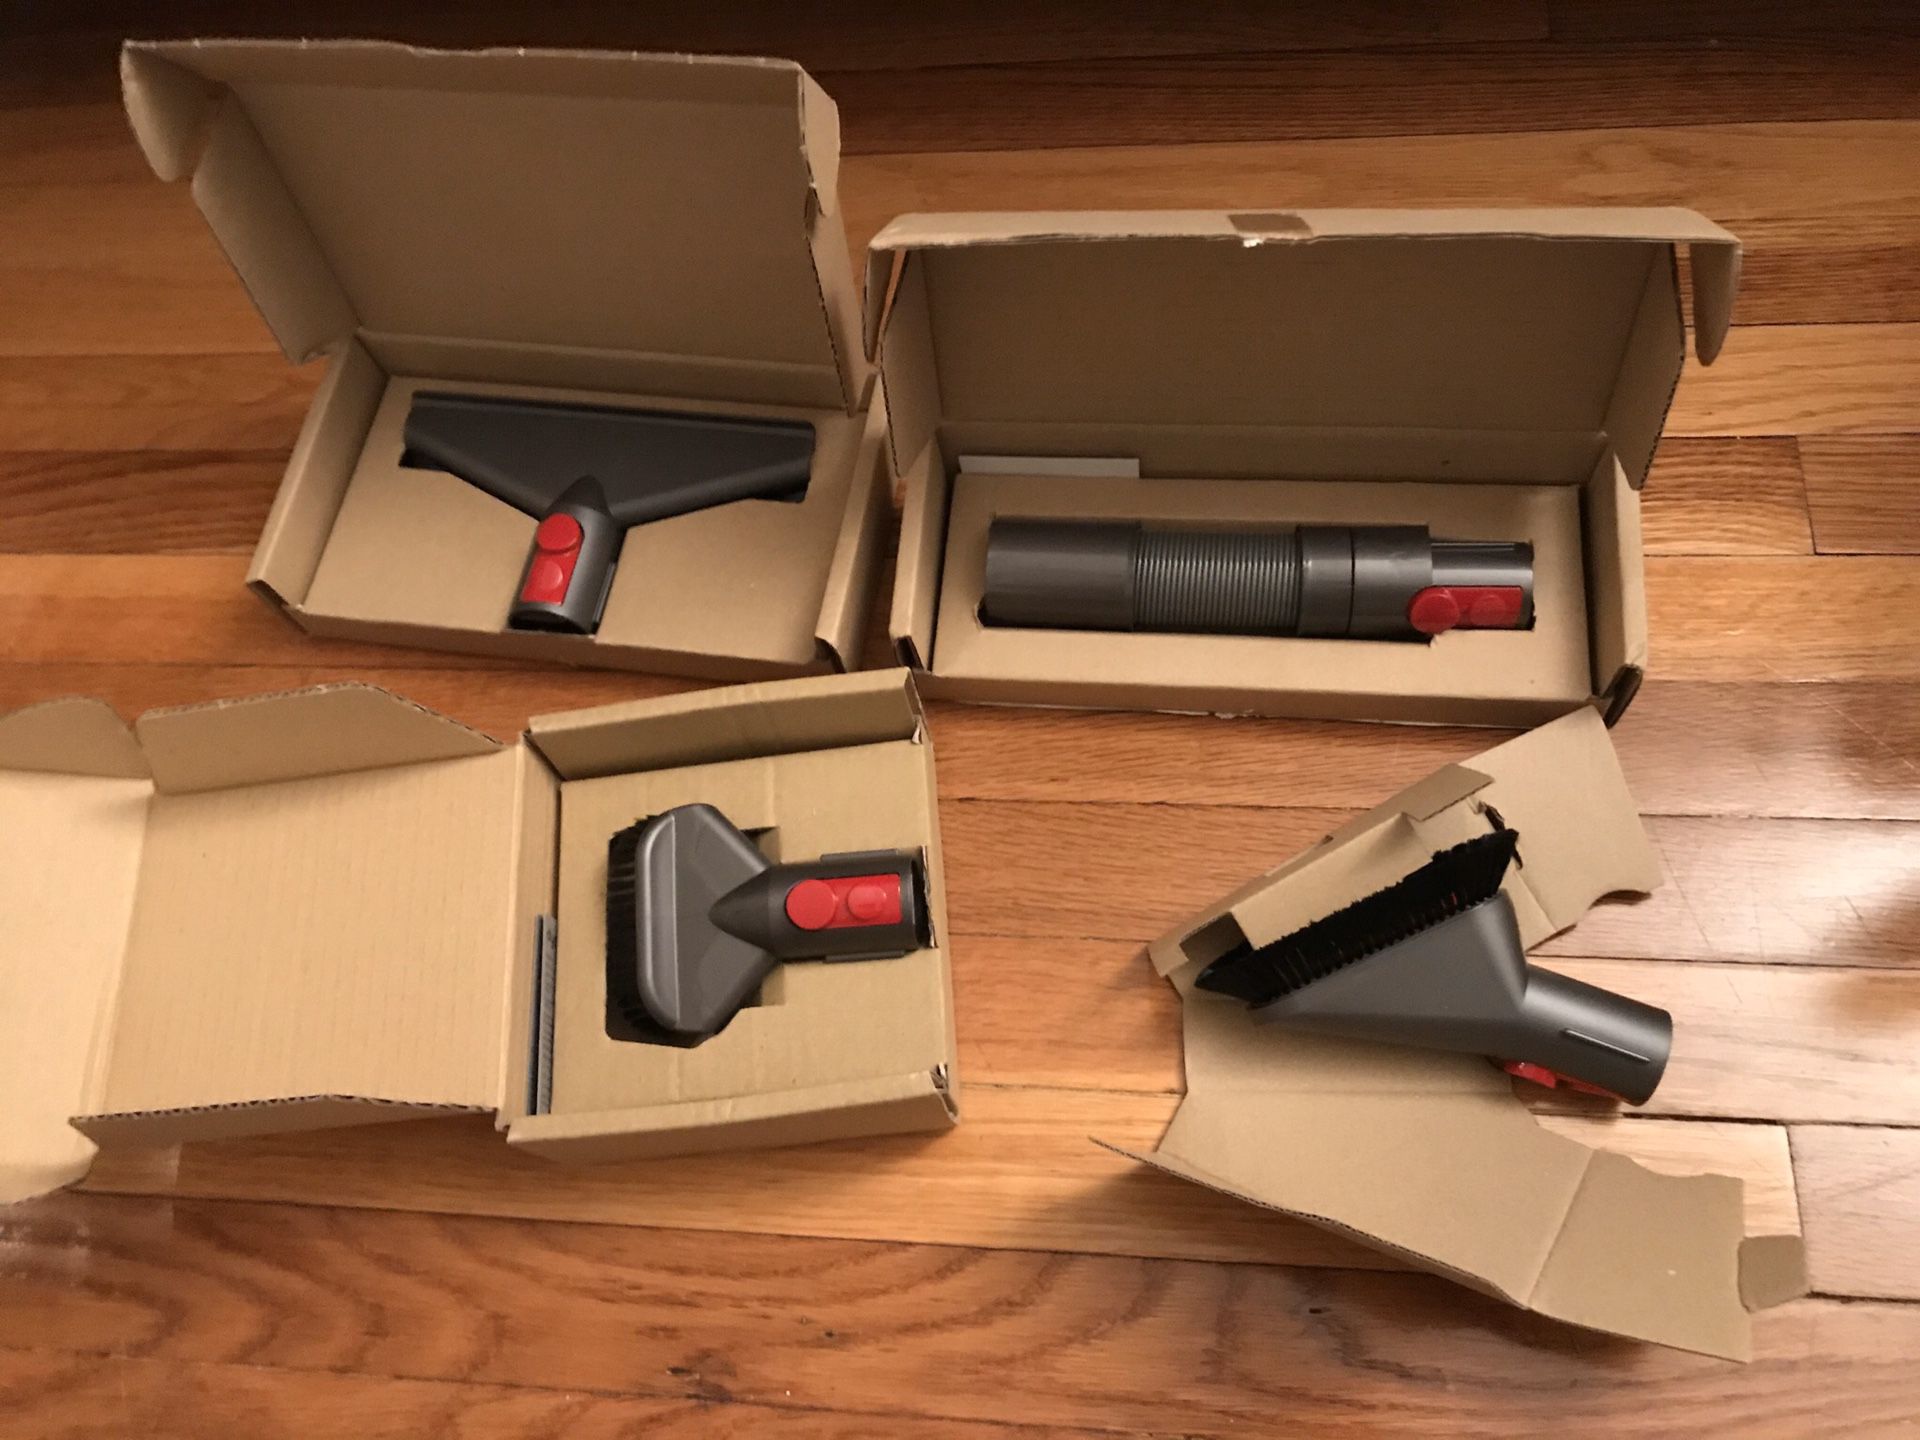 Dyson cordless vacuum tools and bag (V10/V11)